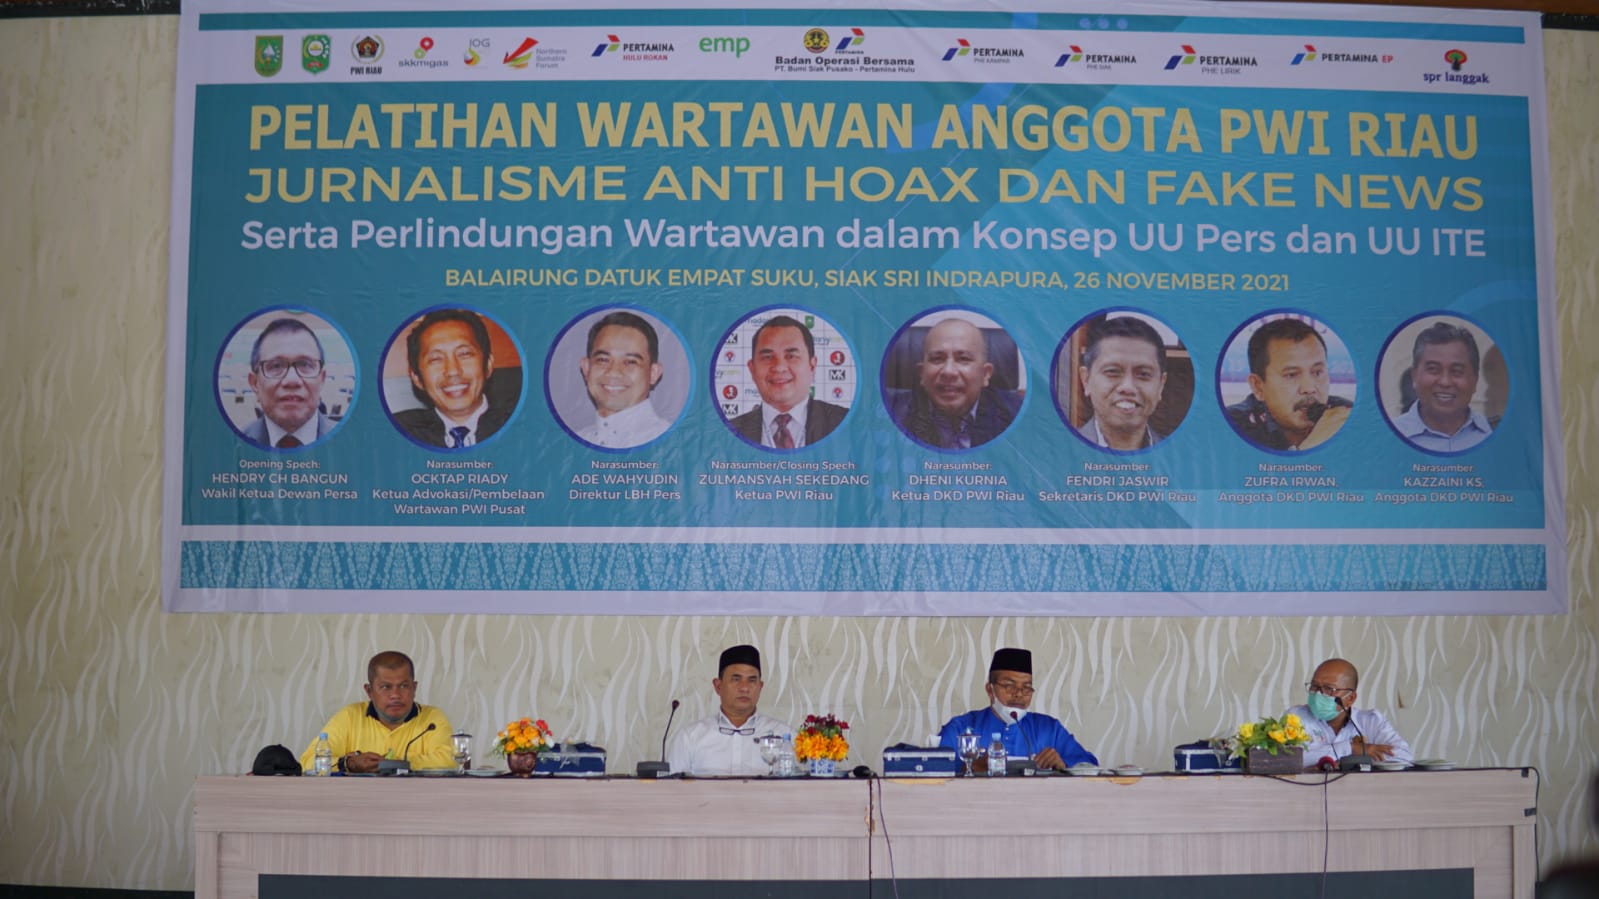 PWI Riau Gelar Pelatihan Jurnalisme Anti Hoax dan Fake News bagi Wartawan